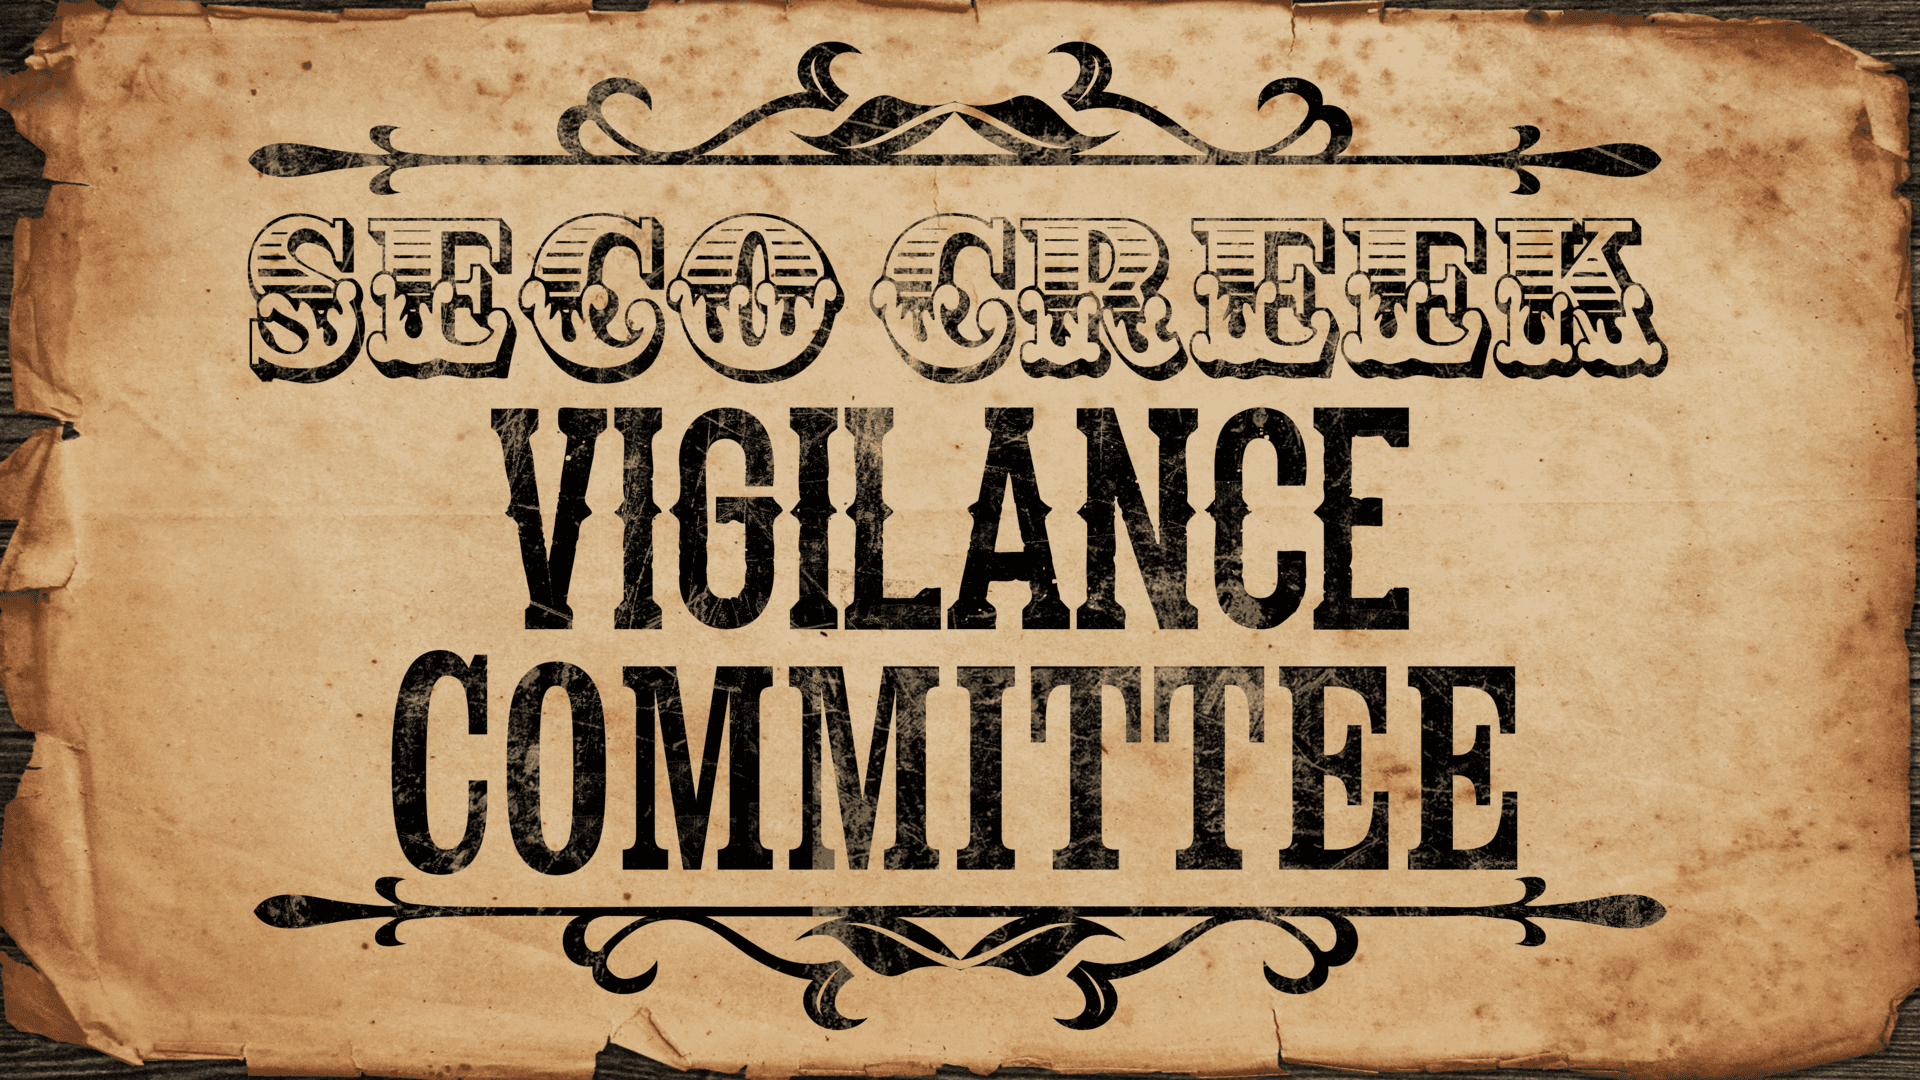 Seco Creek Vigilance Committee logo